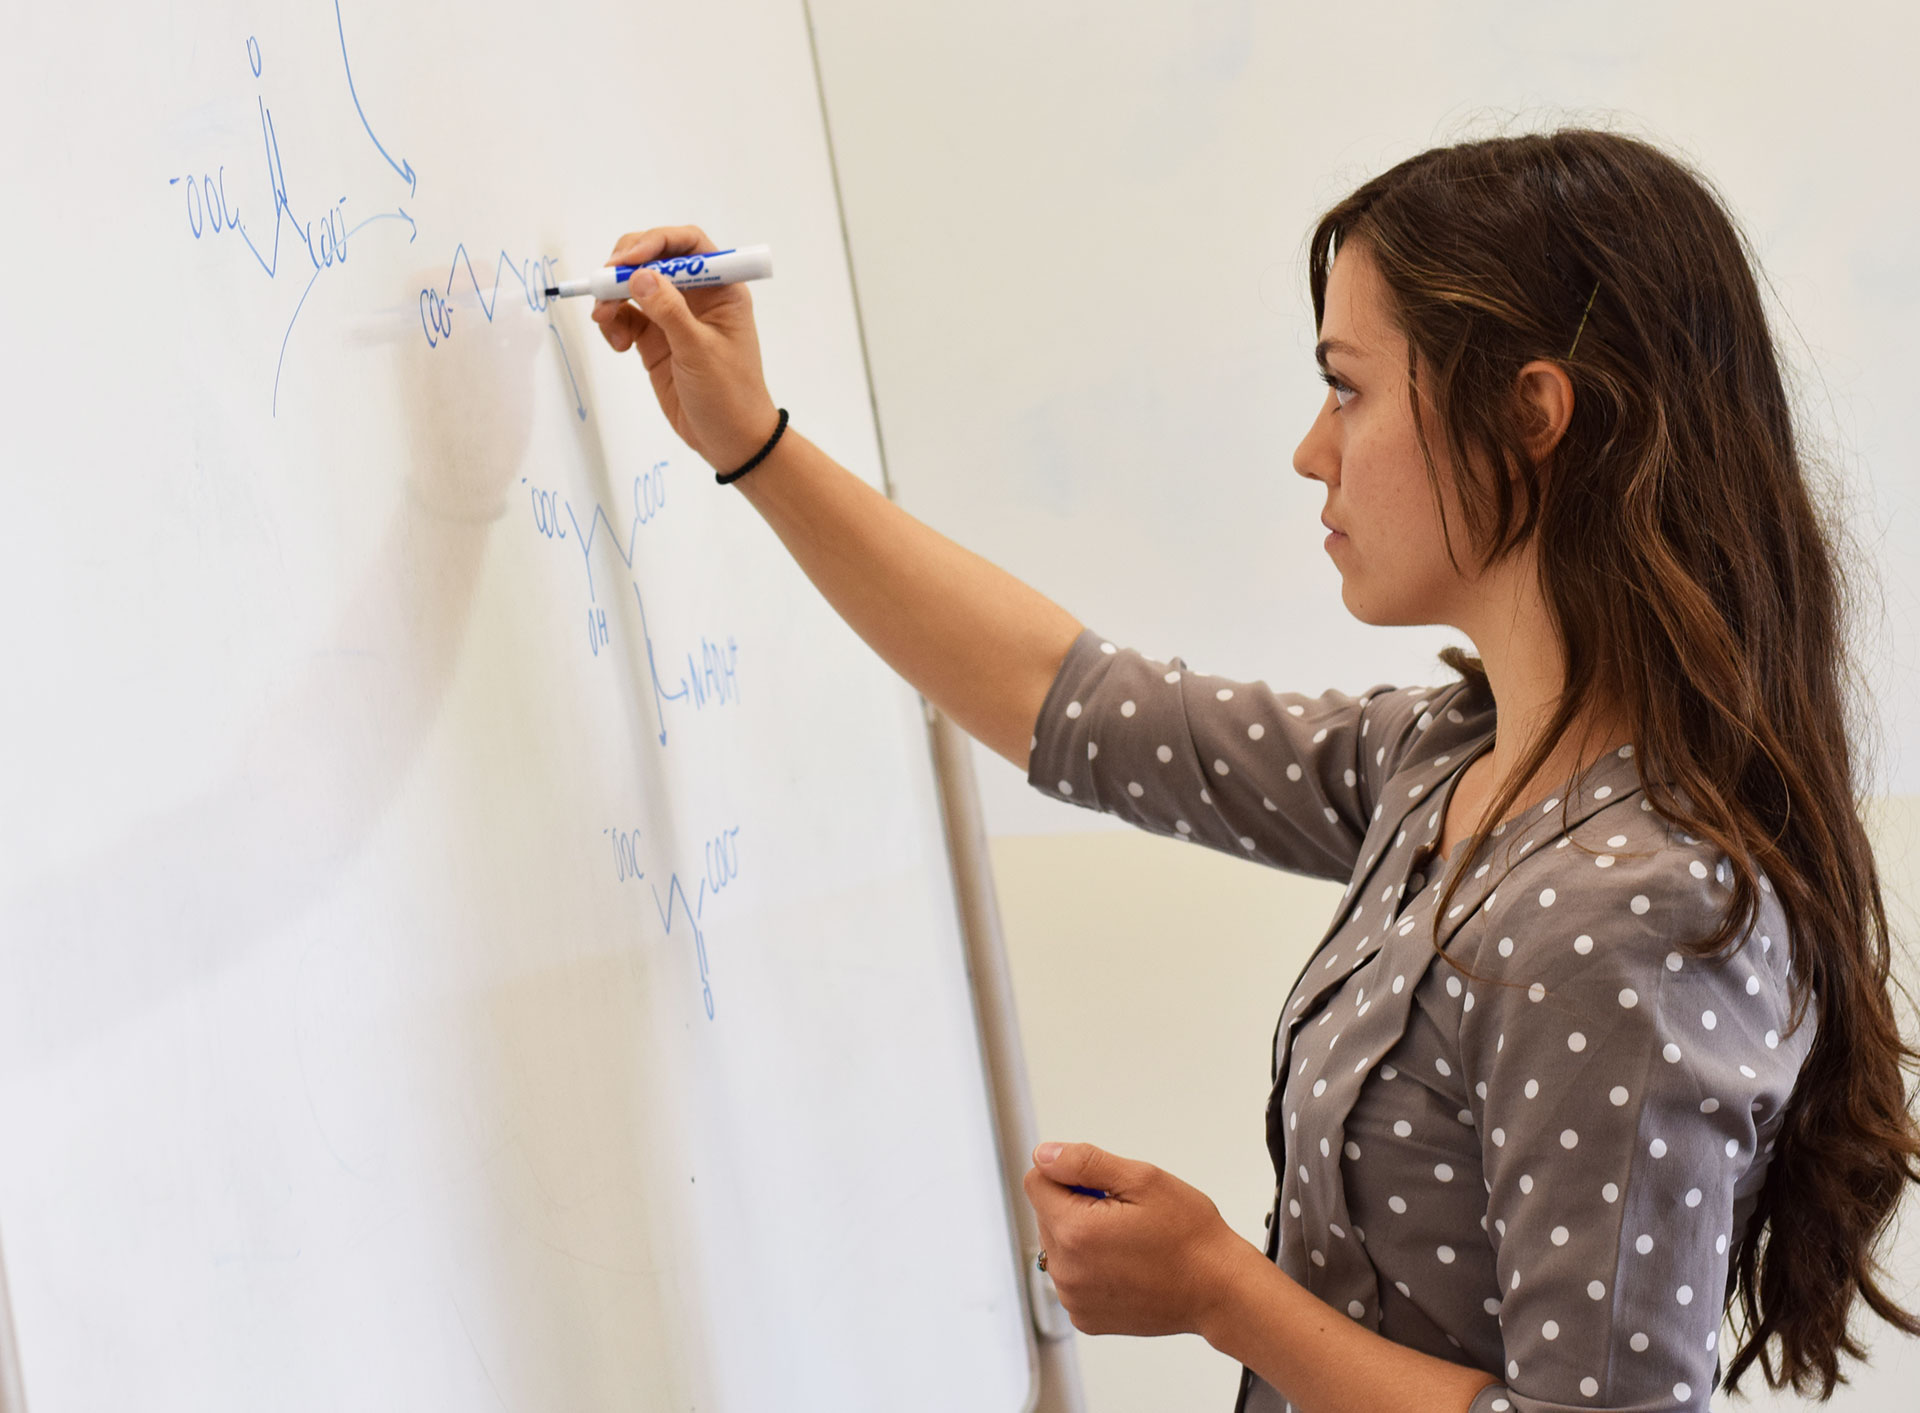 A graduate student writing a formula on a whiteboard